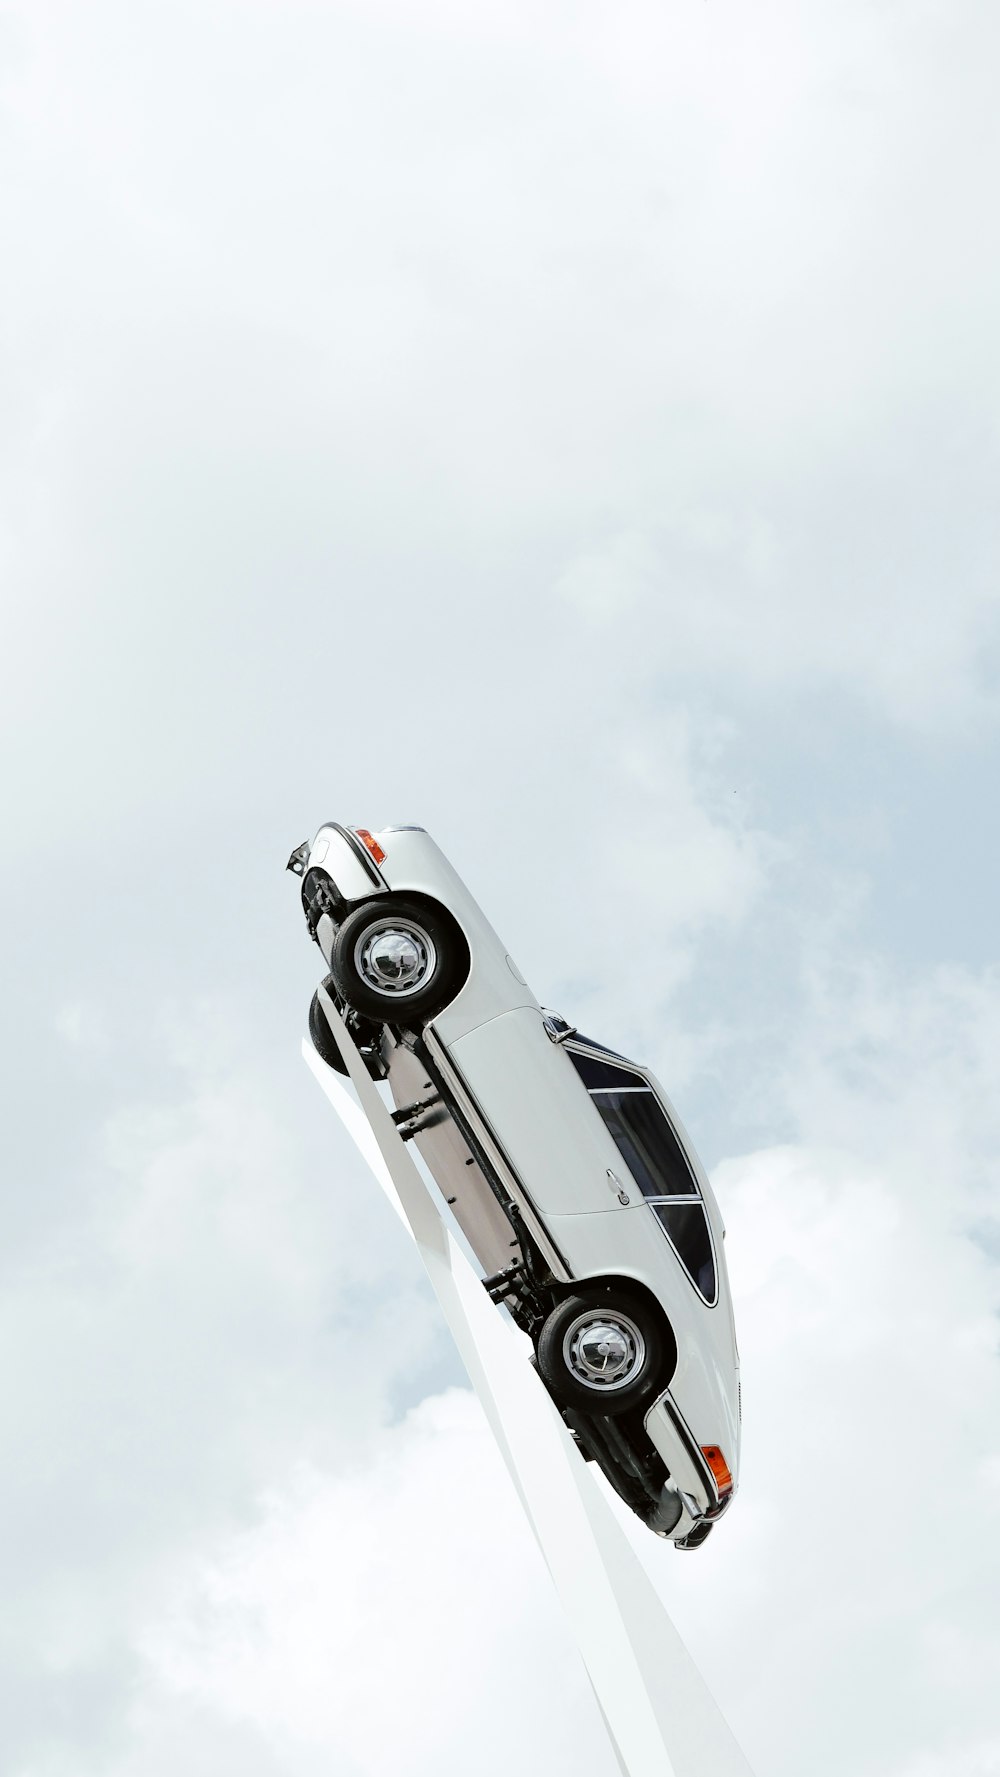 a white car is flying through the air